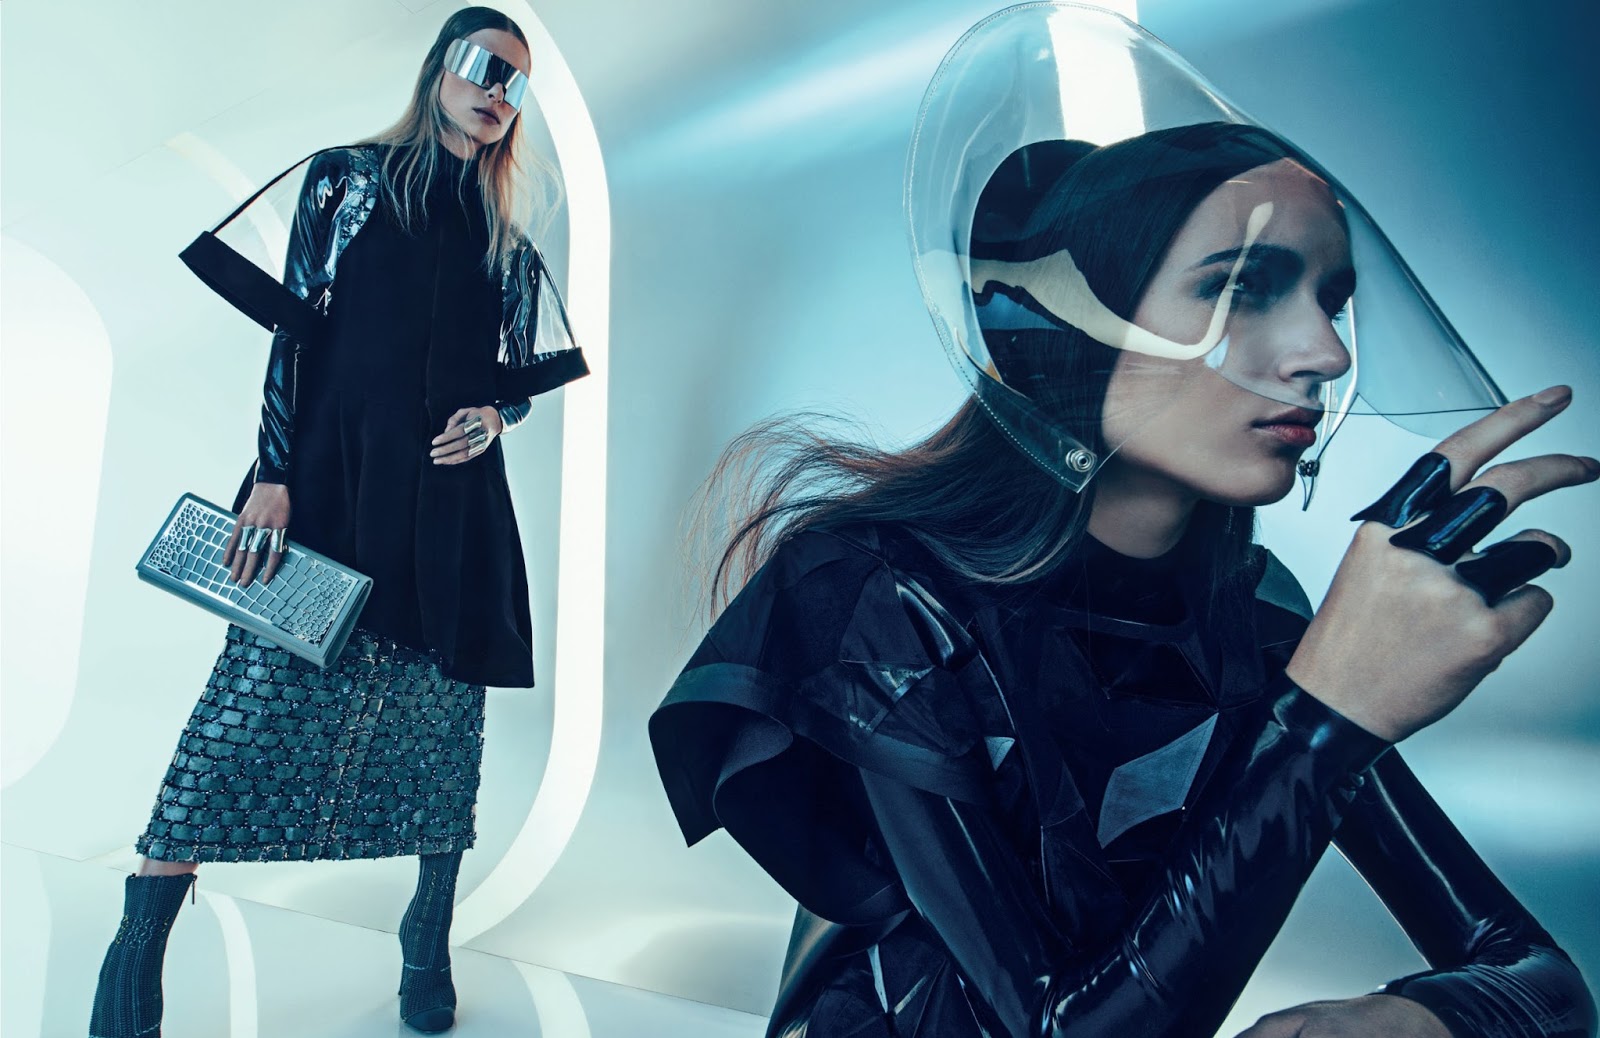 Futuristic Fashion - Futuristic Fashion Shoot With Stella Maxwell